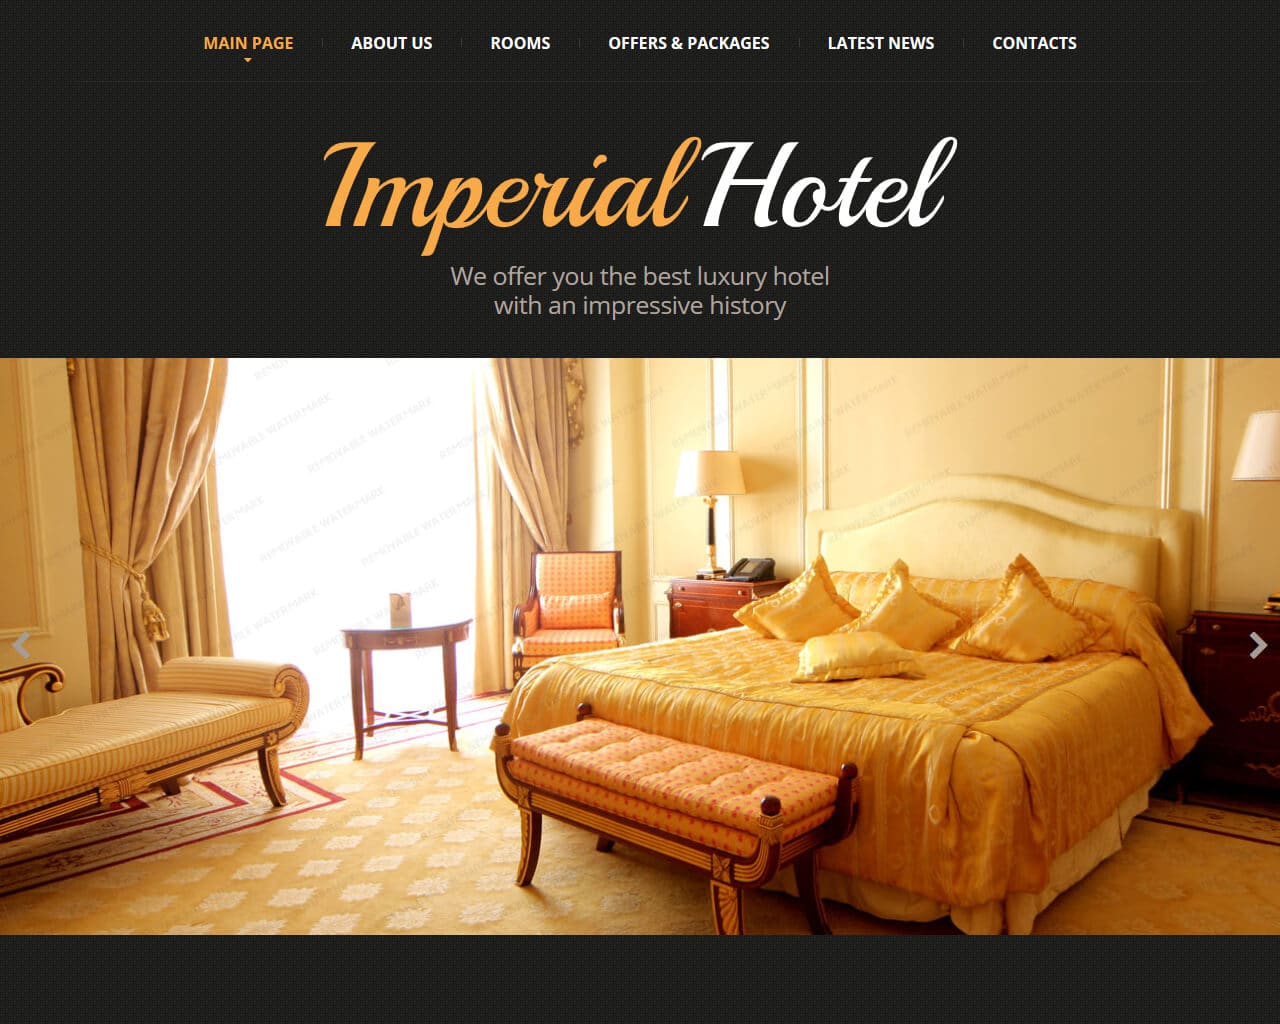 ImperialHotel Website Template